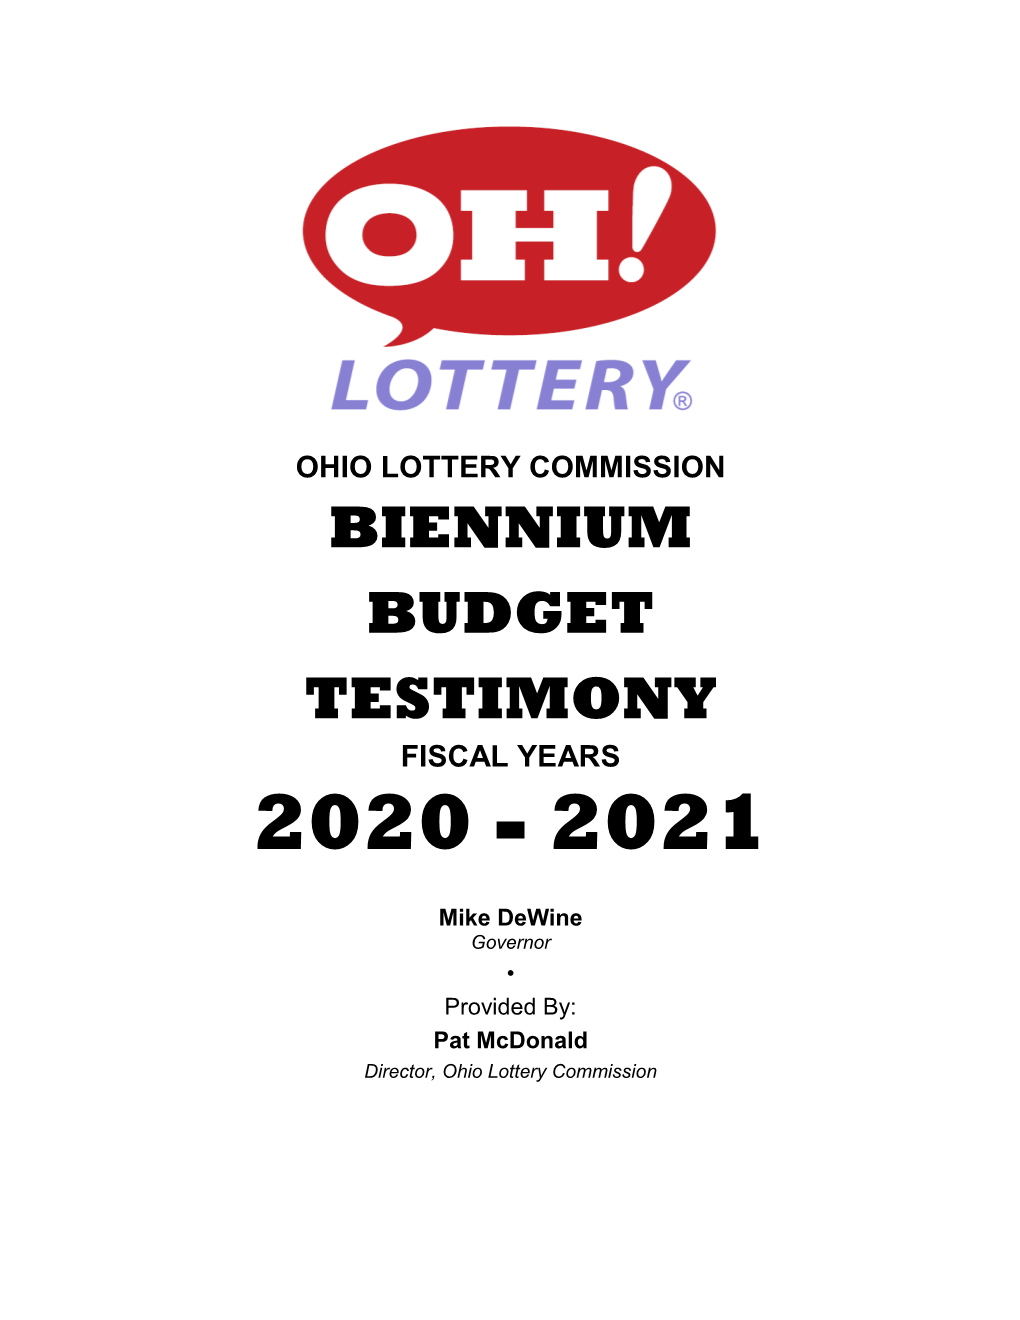 Biennium Budget Testimony Fiscal Years 2020 - 2021